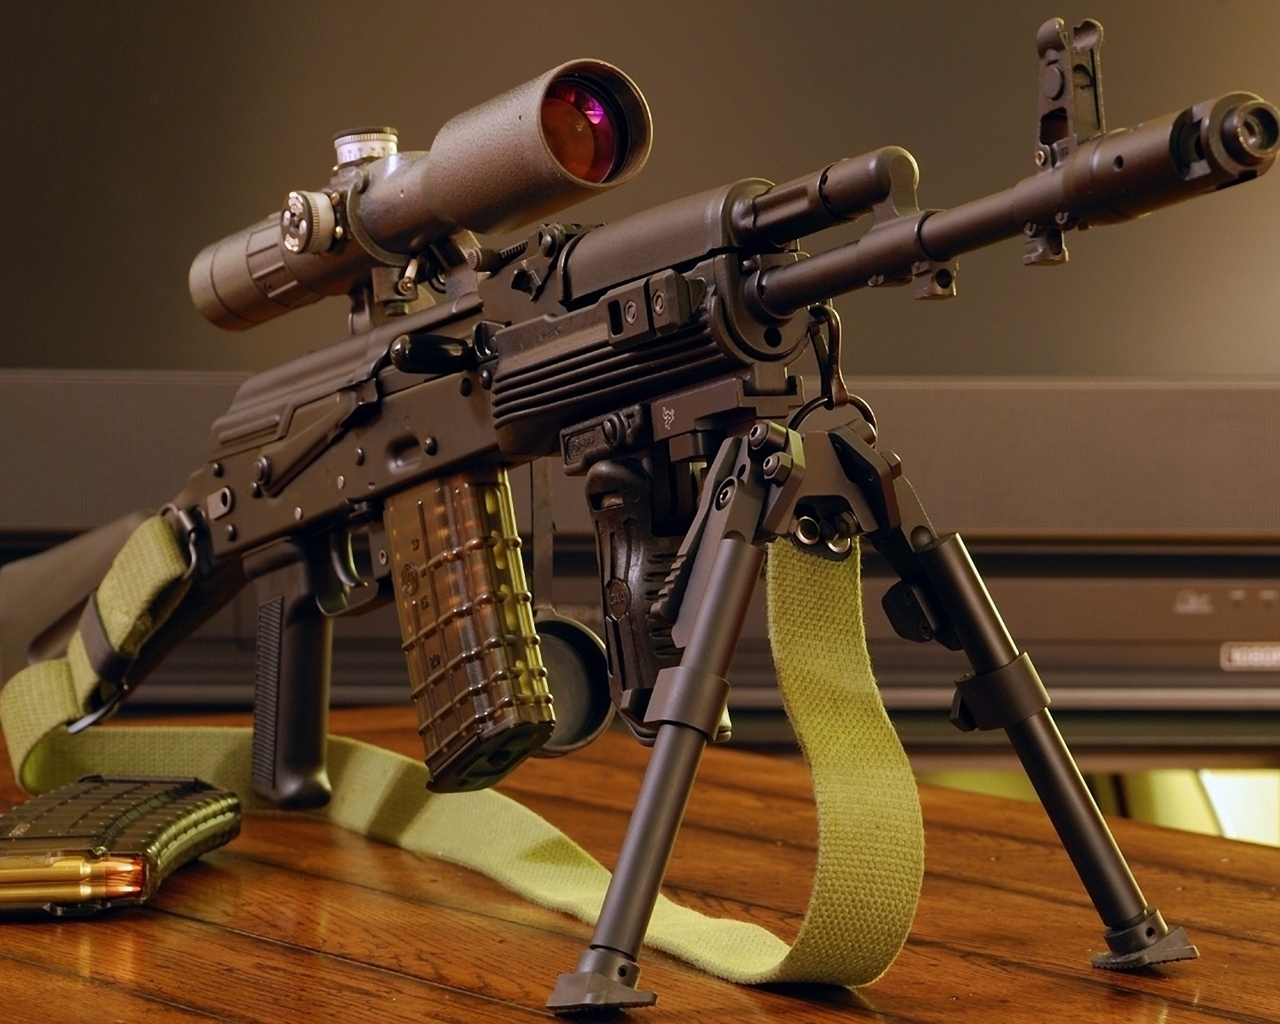 Automatic Gun AK-101 for 1280 x 1024 resolution